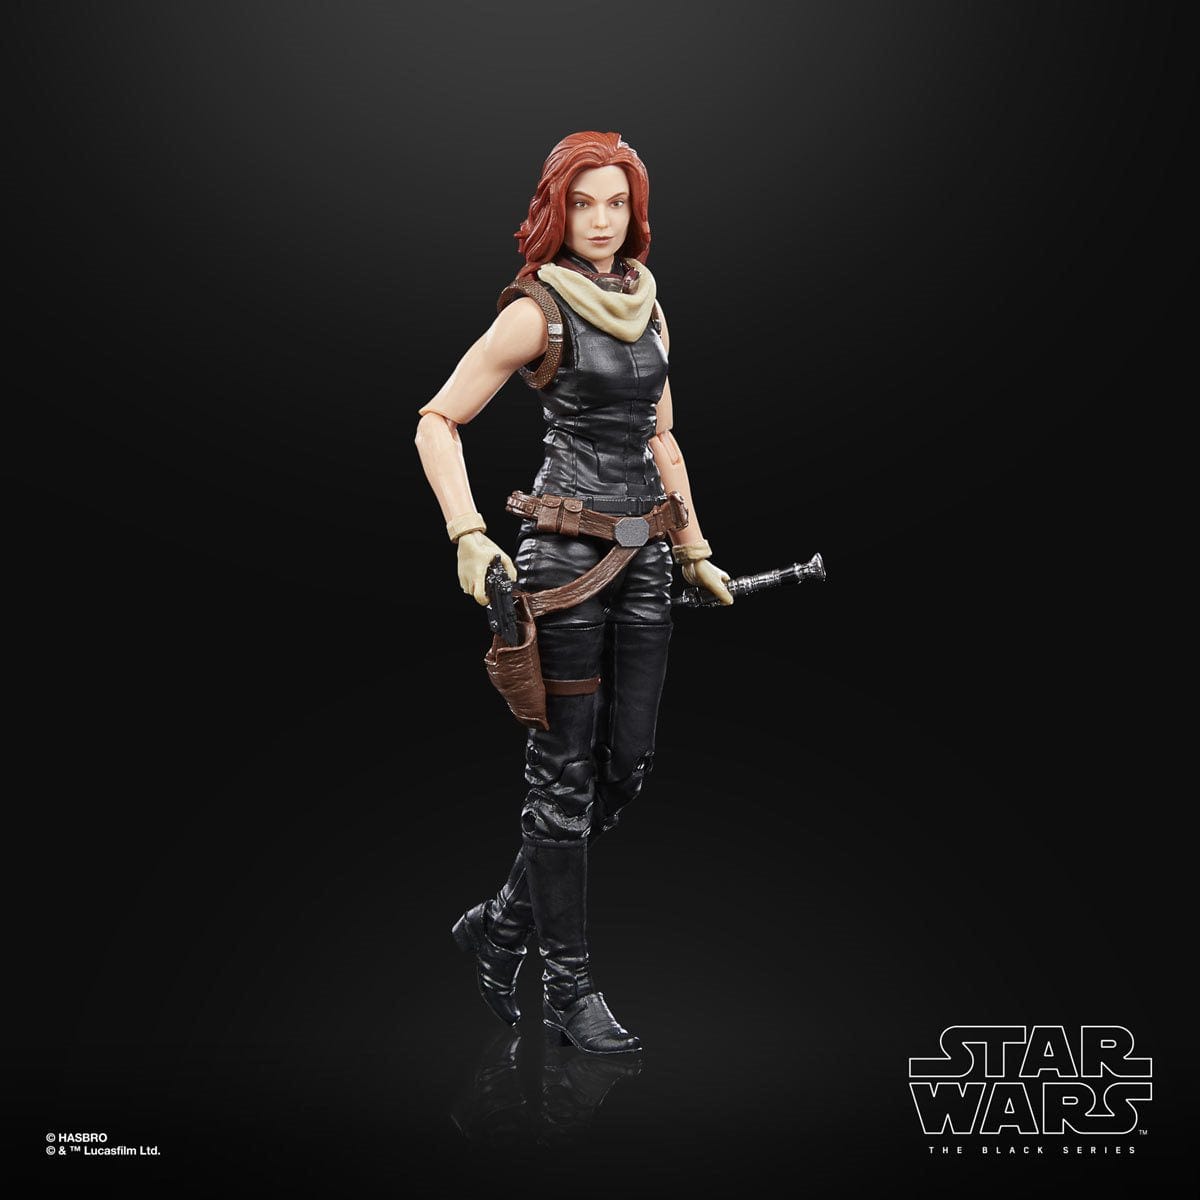 Star Wars The Black Series Mara Jade 6-Inch Action Figure